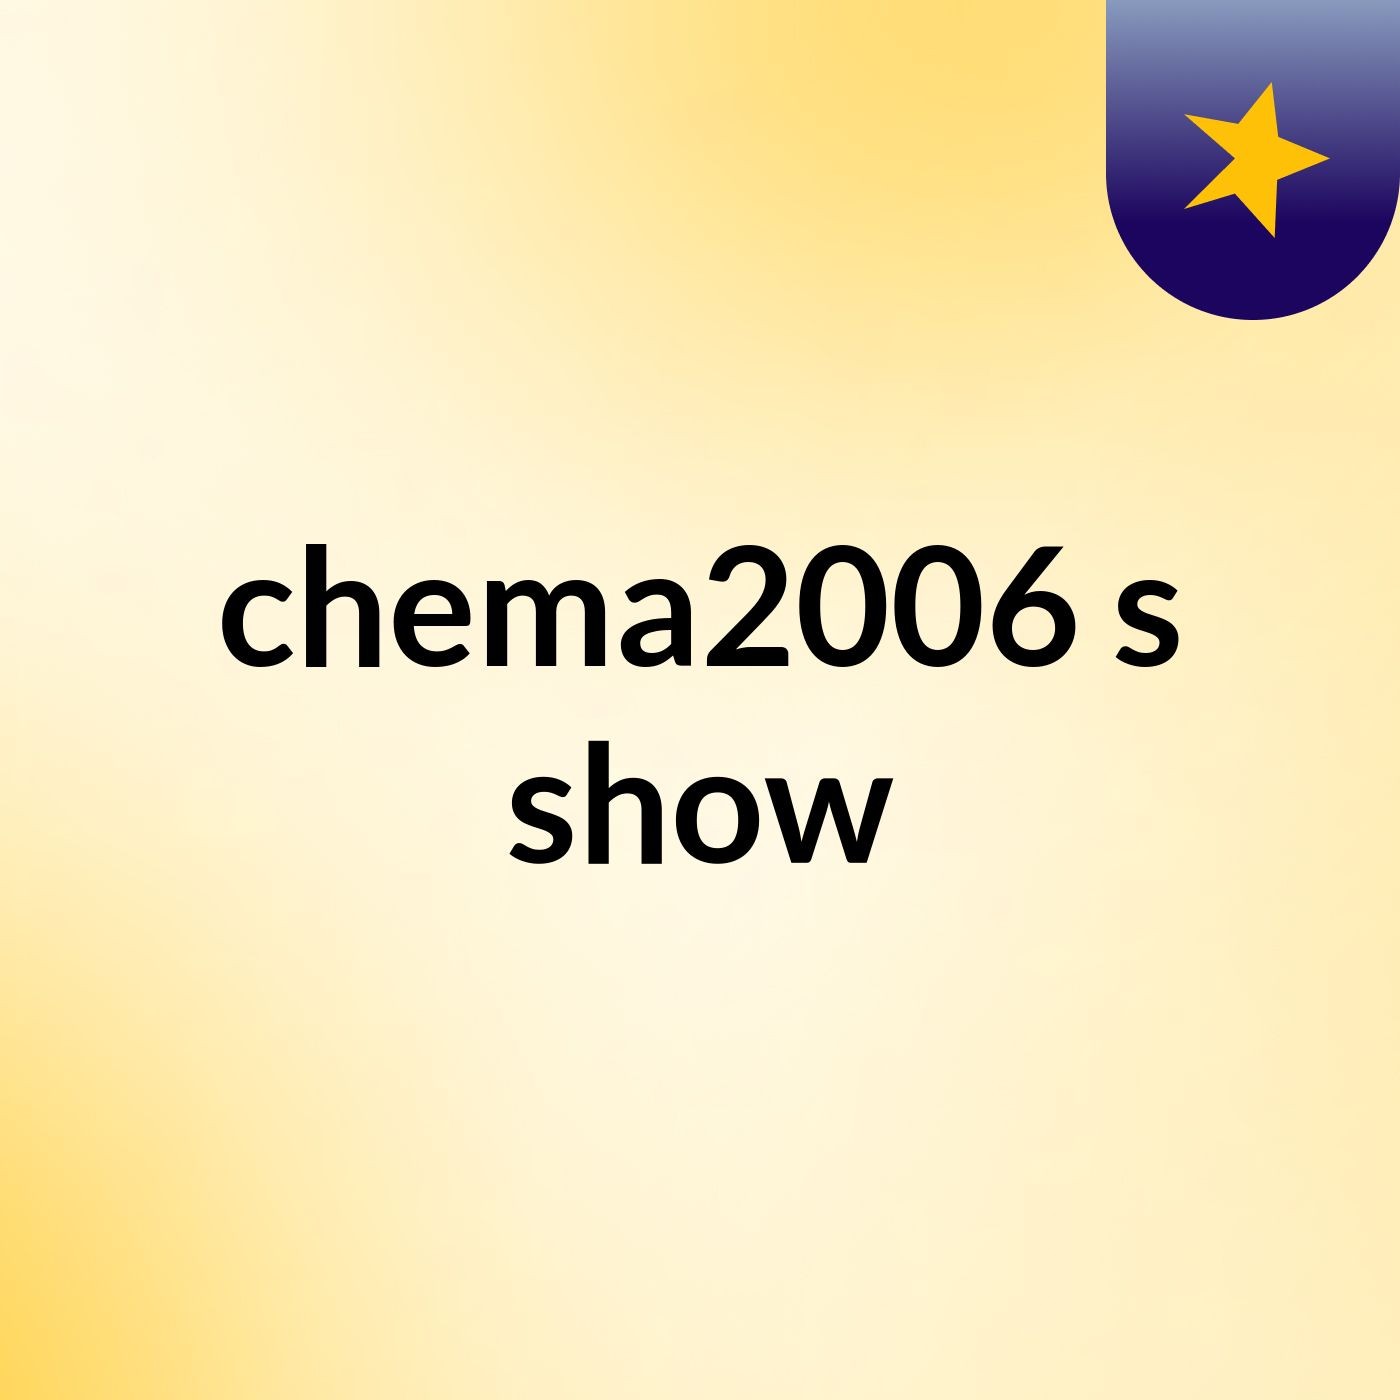 chema2006's show